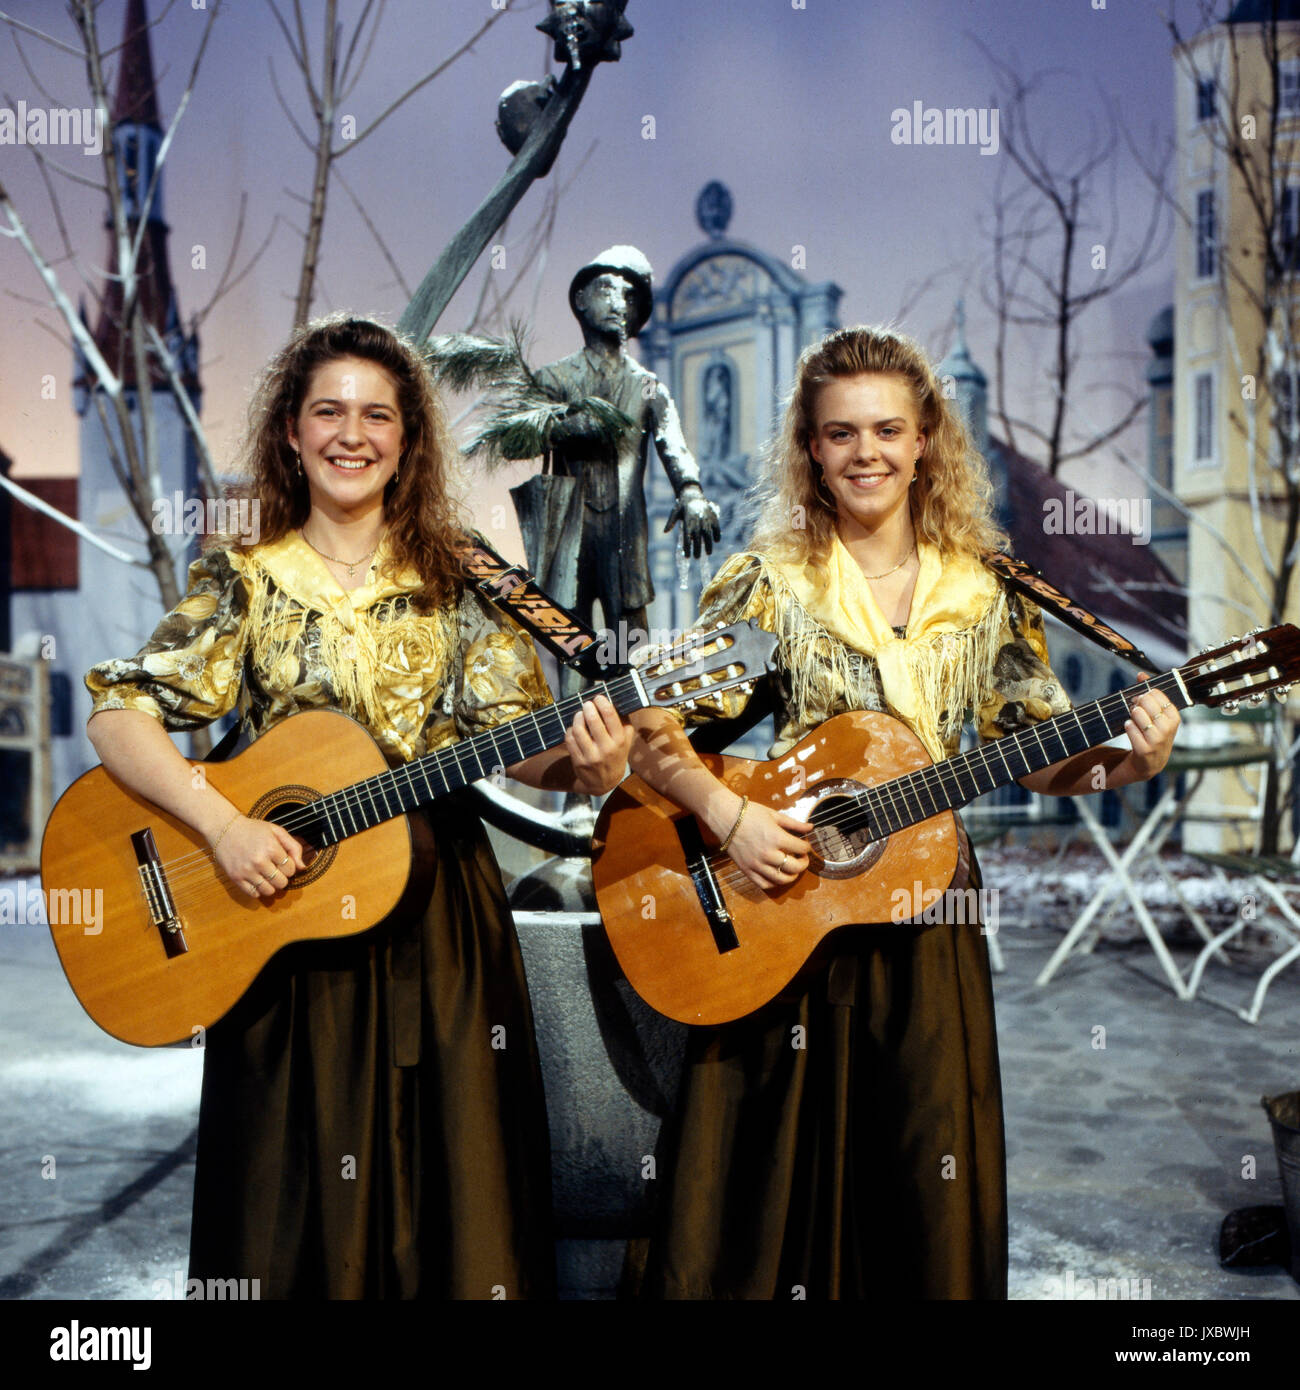 Das Volksmusikduo Simone und Bettina, Deutschland 1990er Jahre. Folklore music duo Simone und Bettina, Germany 1990s. Stock Photo